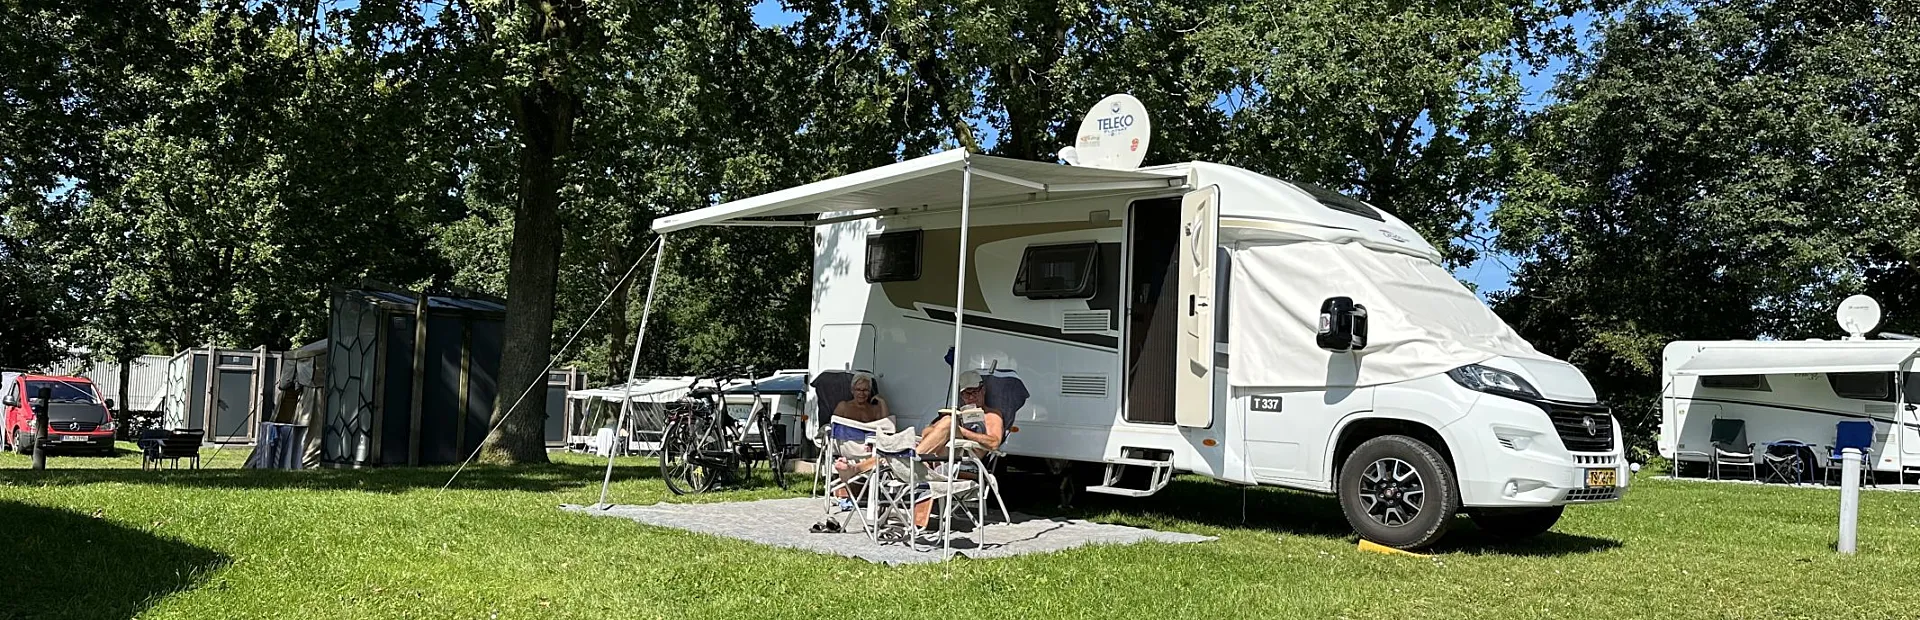 Naturistencamping Nederland camperplaats verhard 7